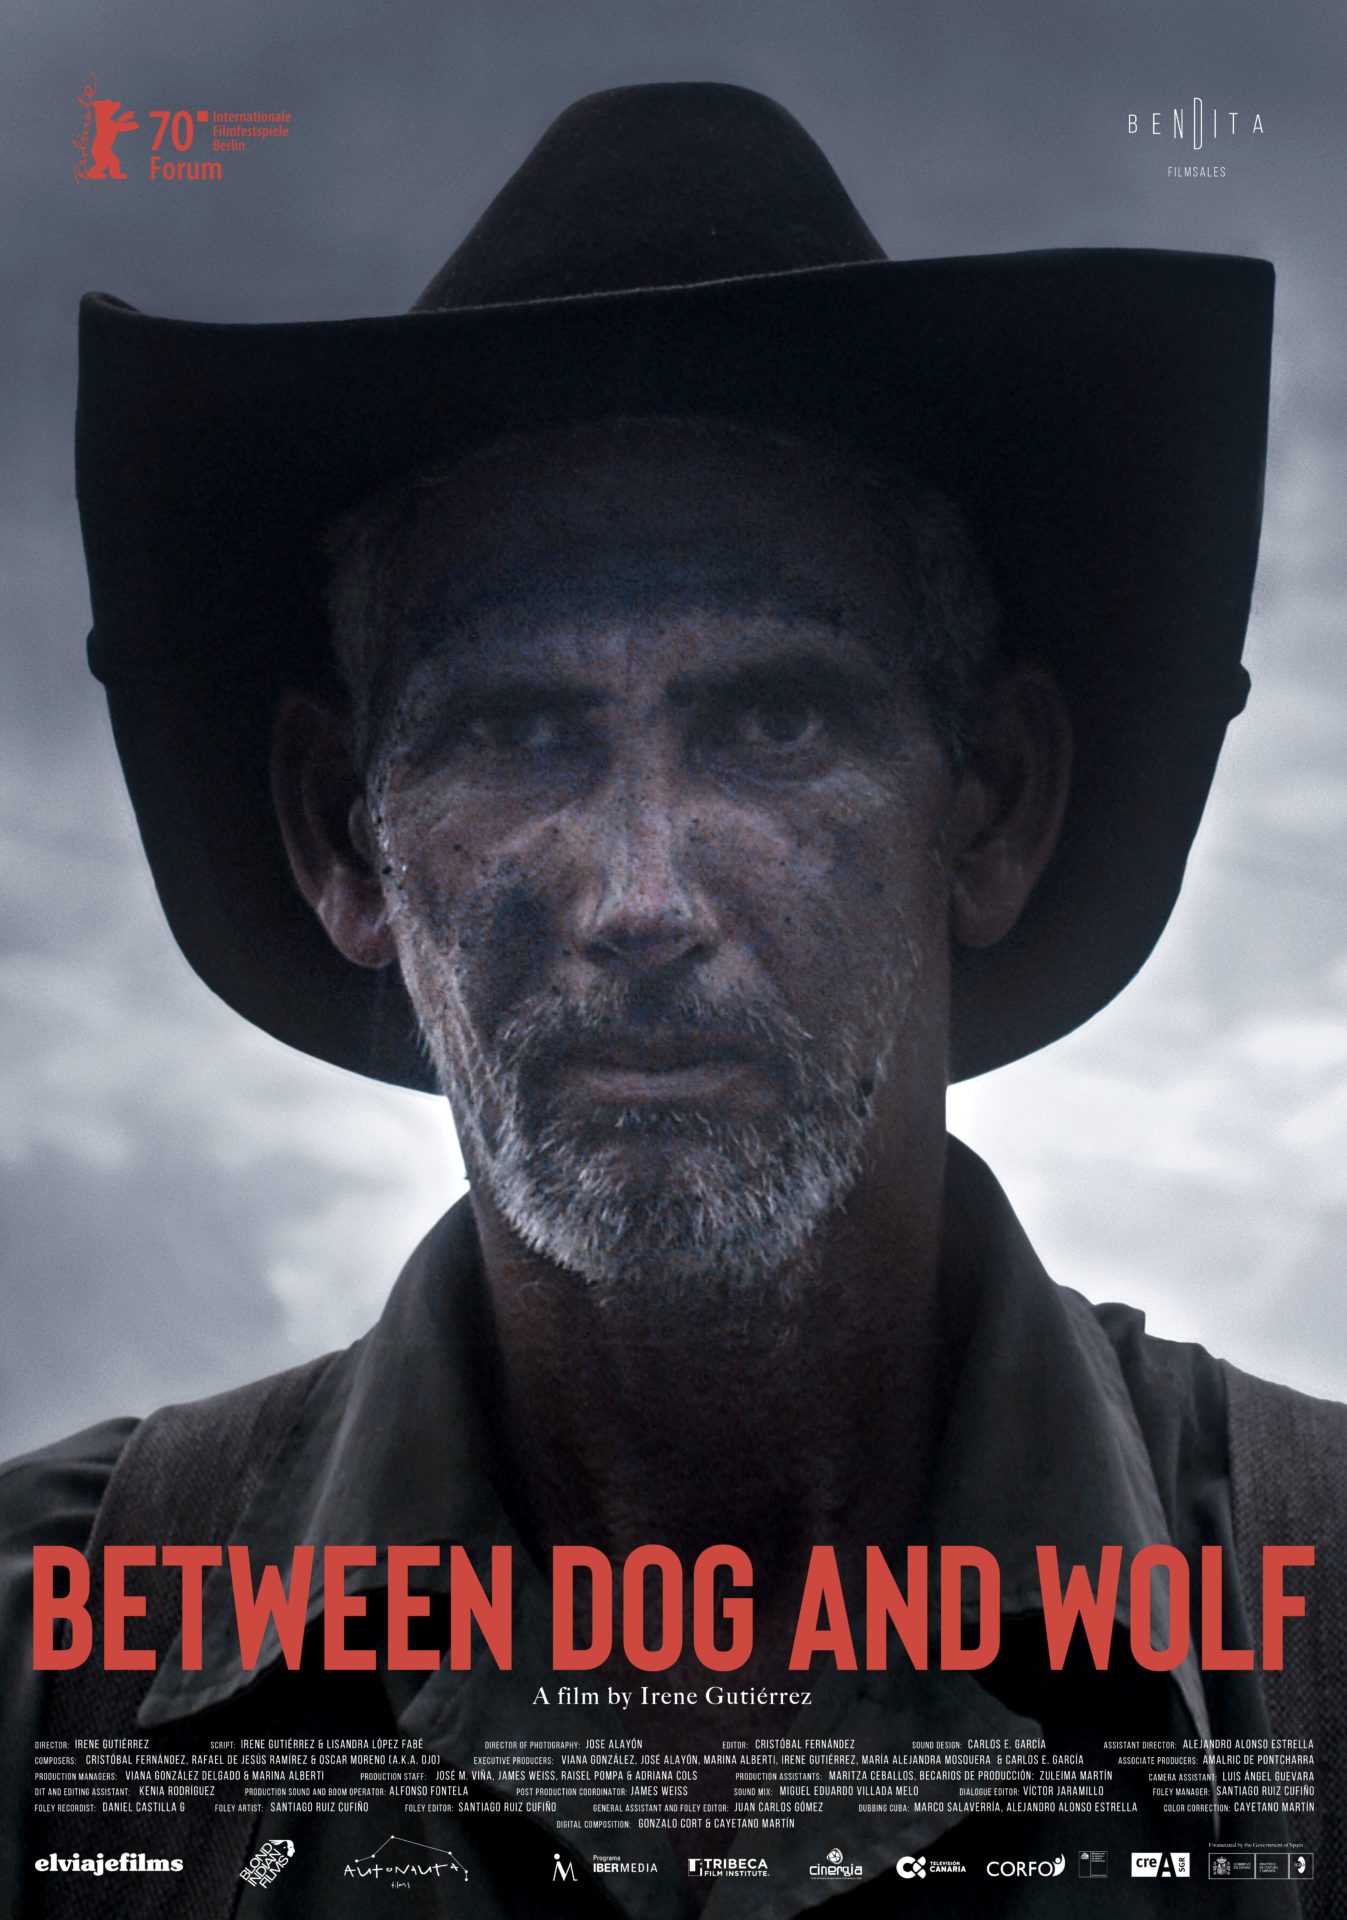 BETWEEN DOG AND WOLF+ by Irene Gutiérrez